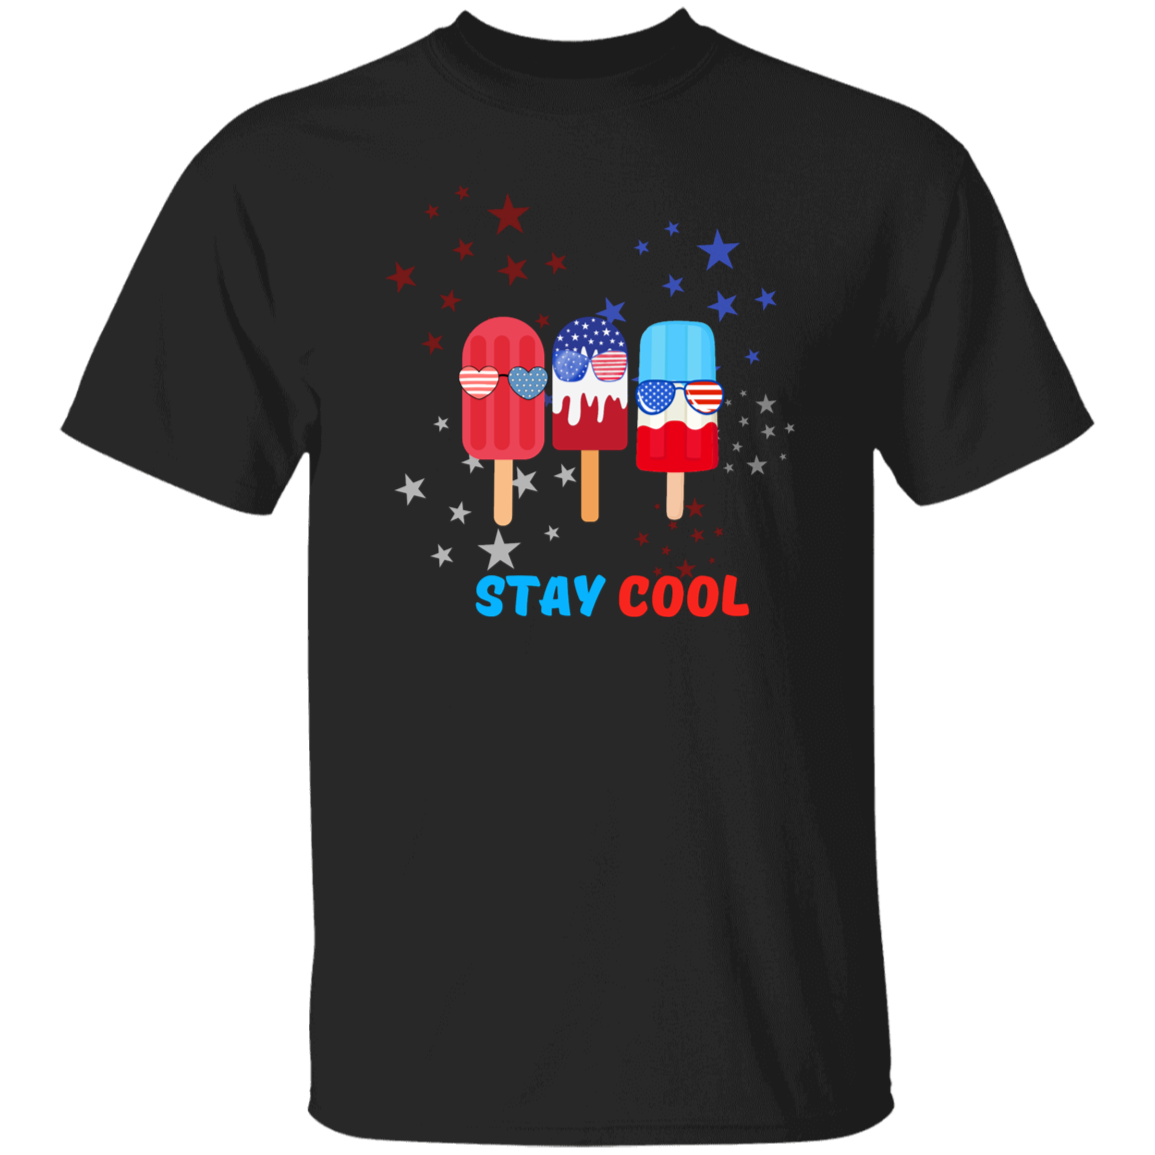 "Stay Cool" Summer Short Sleeve T-Shirt